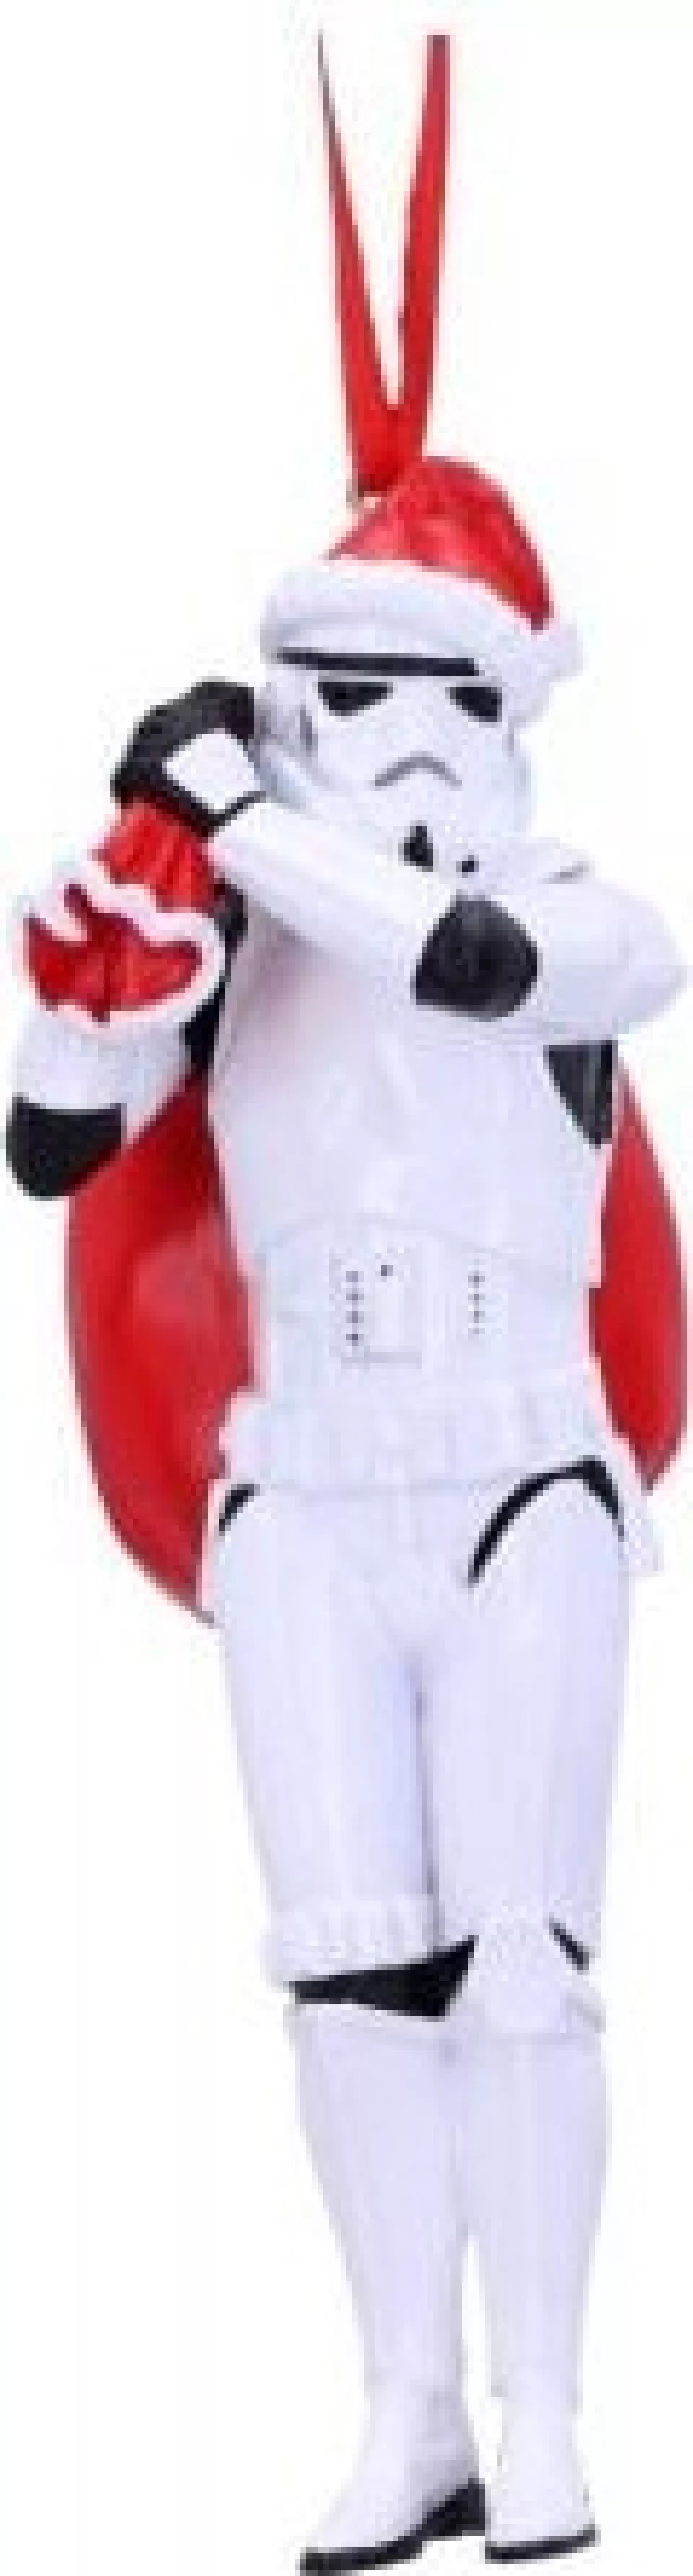 #1 - Star Wars Julepynt - Stormtrooper Med Julesæk - 13 Cm